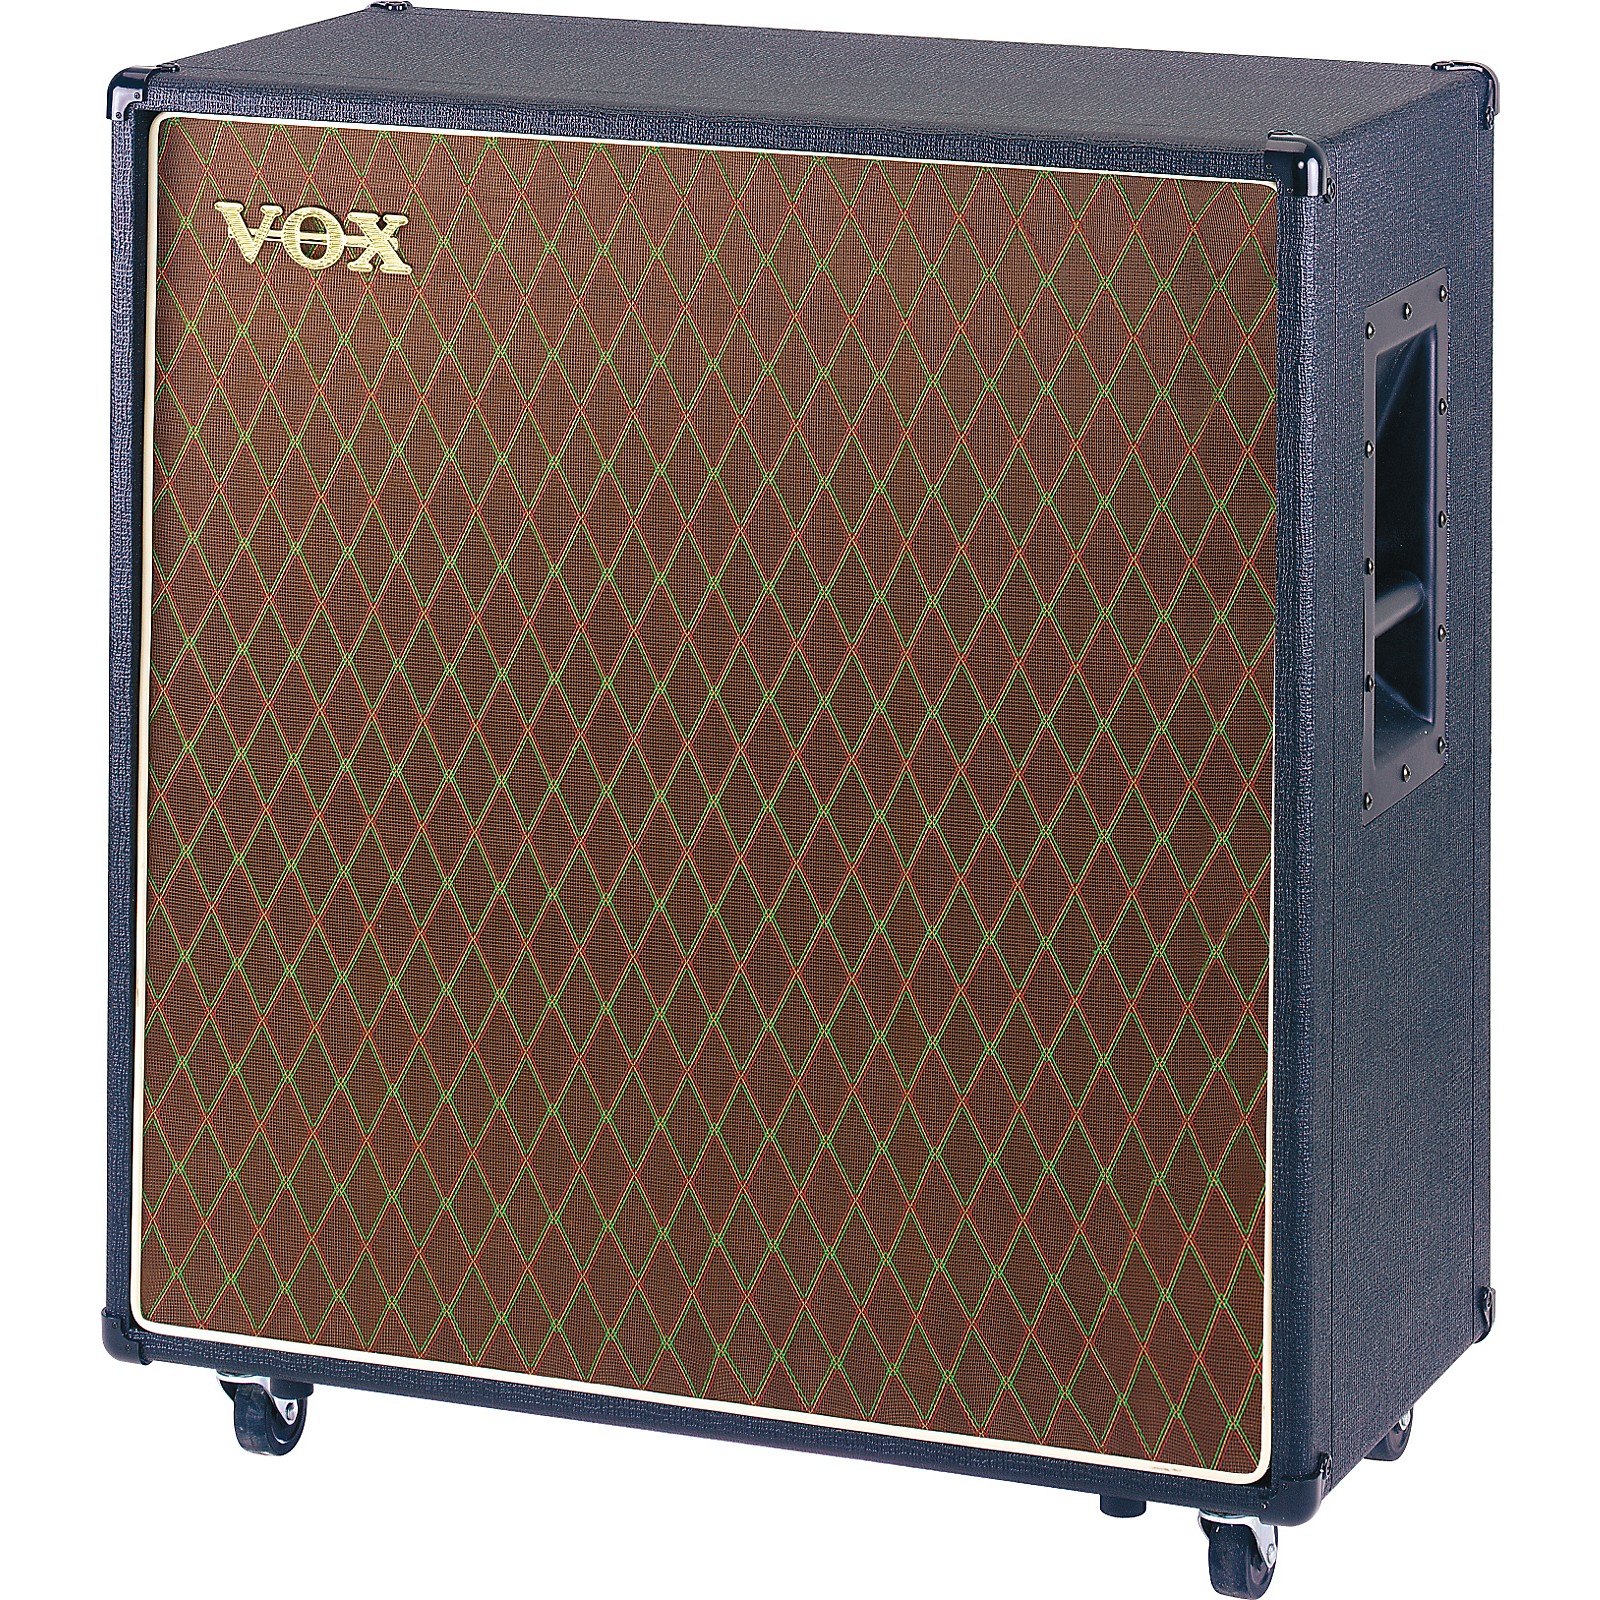 Vox Custom Classic V412bn 120w 4x12 Guitar Extension Cabinet Brown